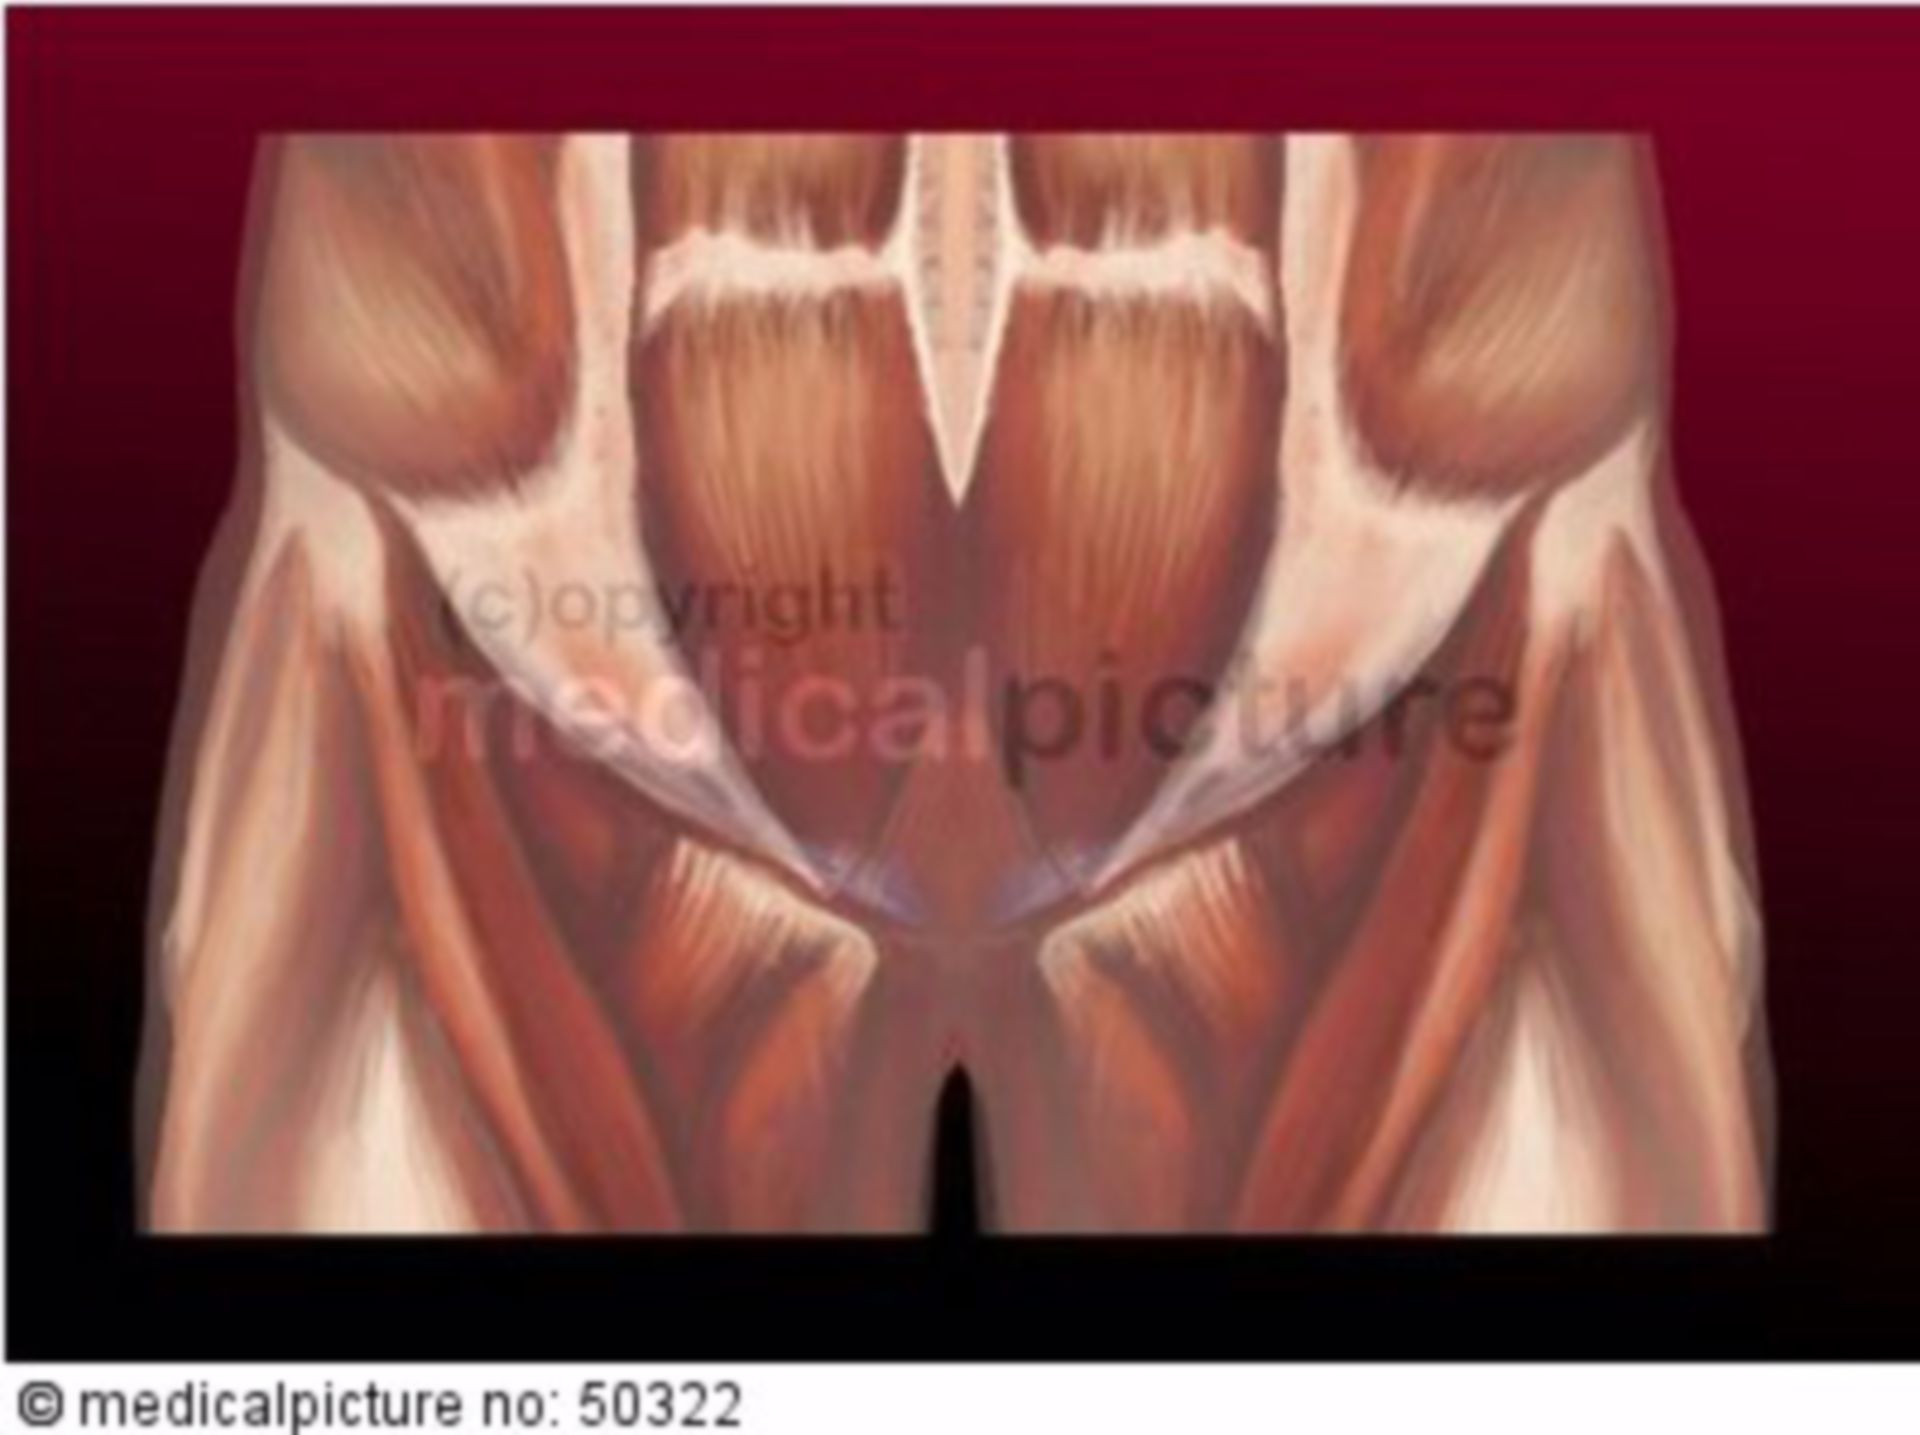 Anatomy of the pelvic area